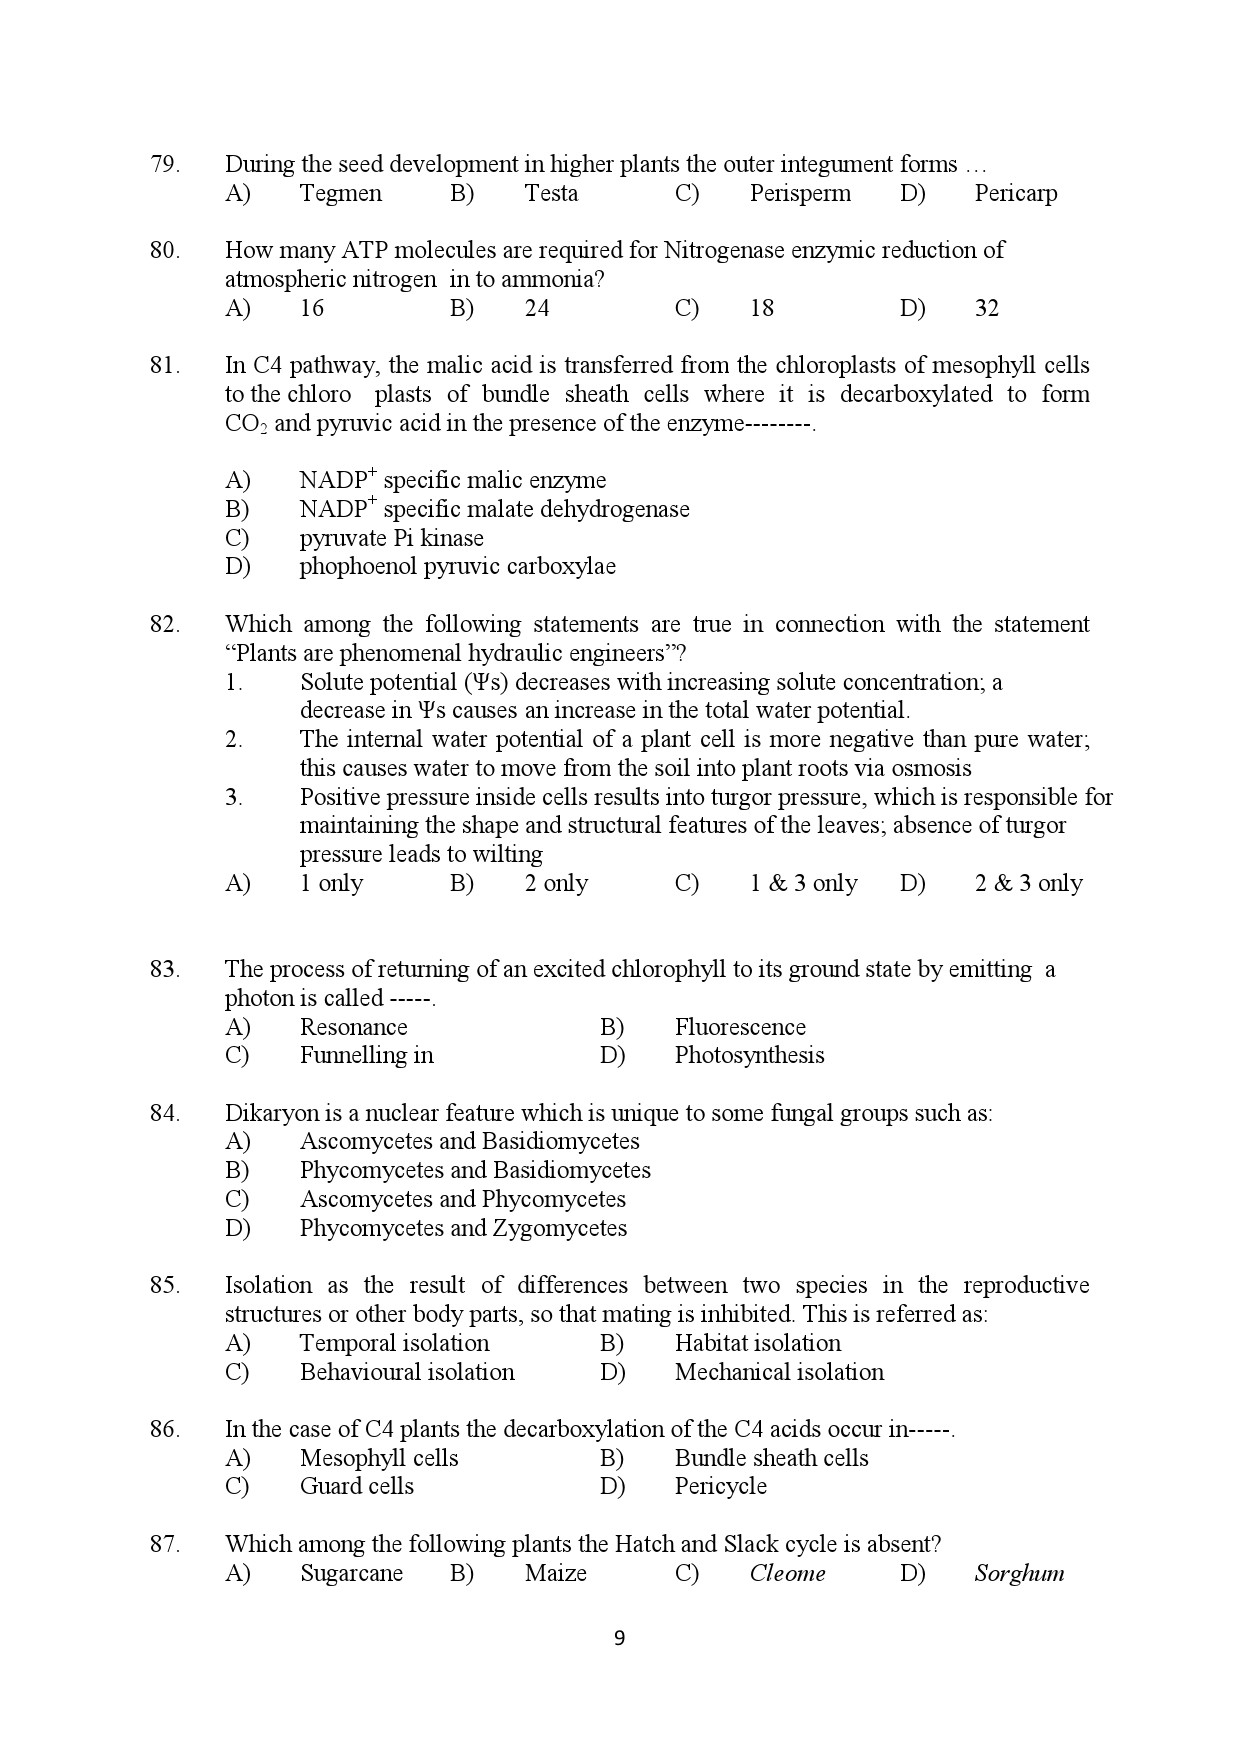 Kerala SET Botany Exam Question Paper February 2020 9